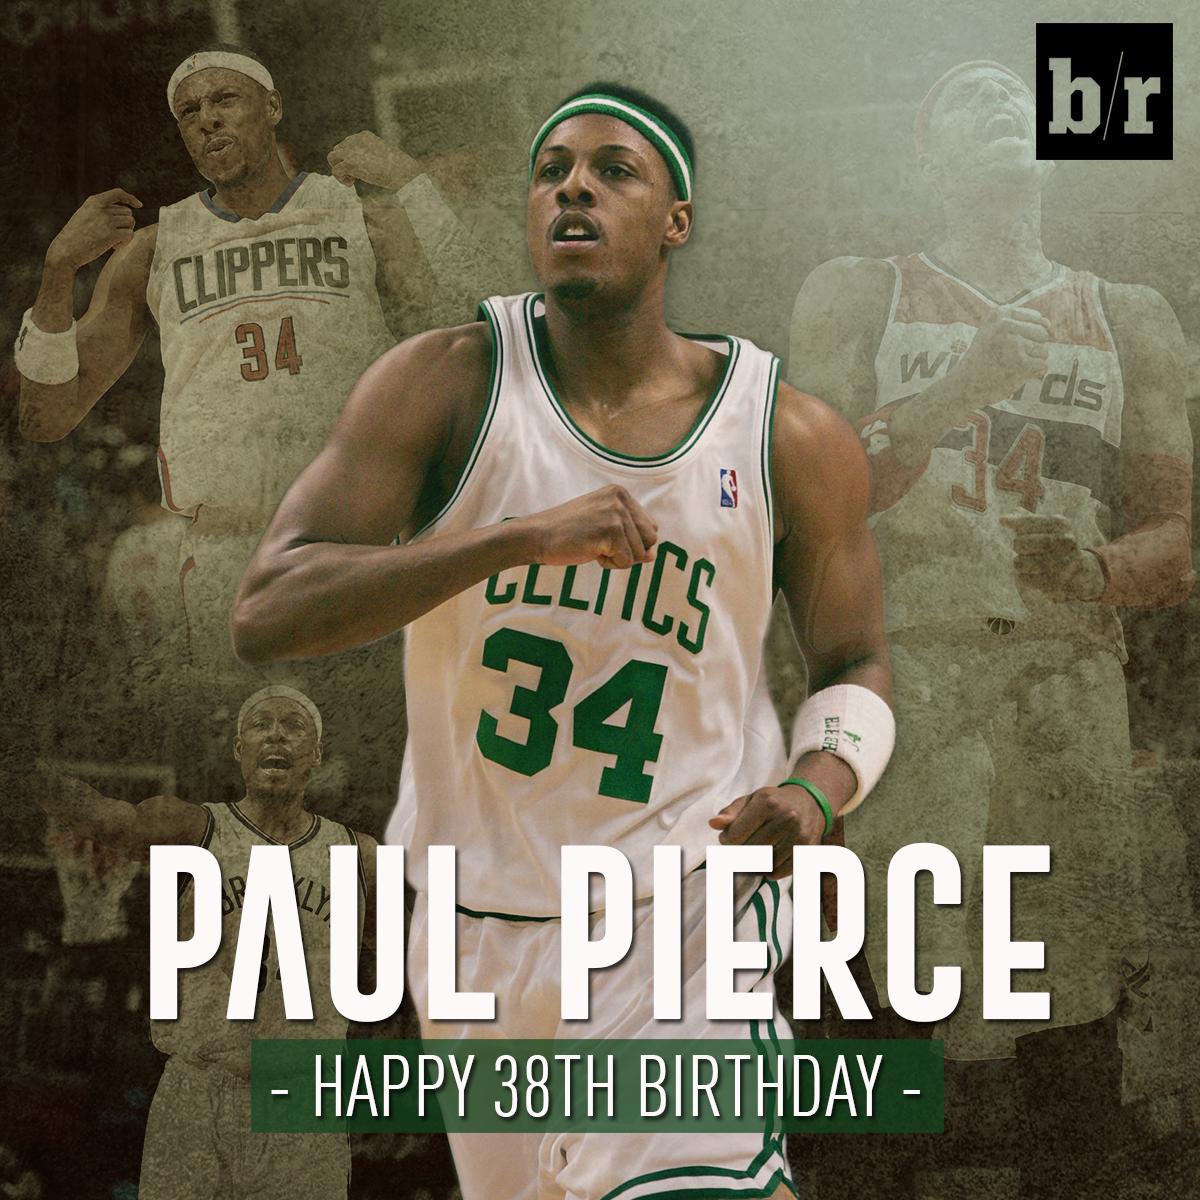 Happy 38th birthday to The Truth, Paul Pierce! 